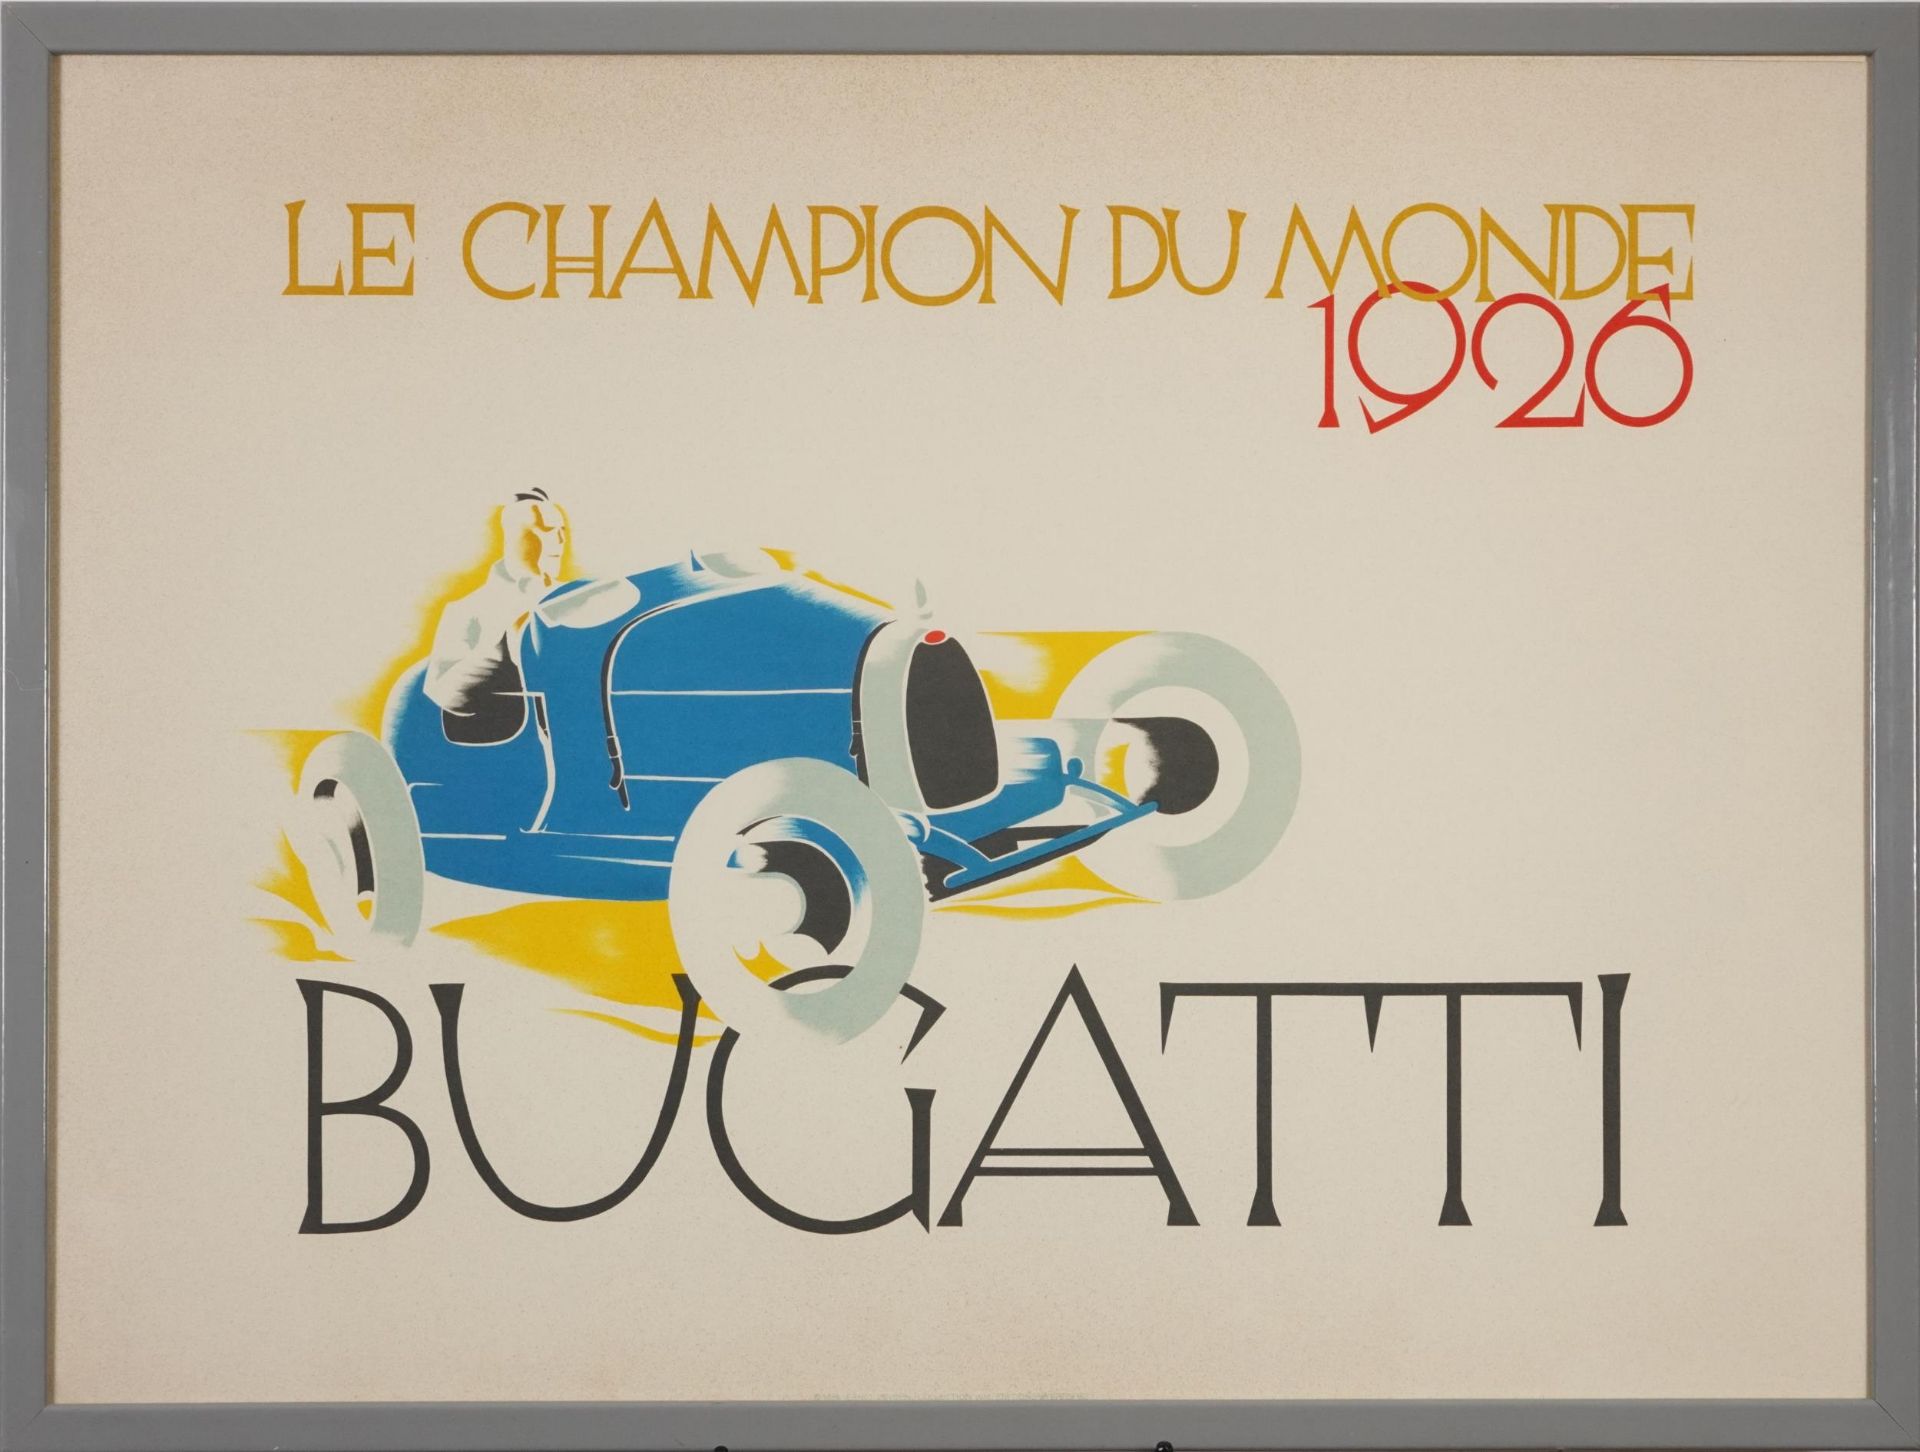 Le Champion du Monde 1926 Bugatti automobilia advertising poster, published Ernst Dryden Collection, - Image 2 of 3